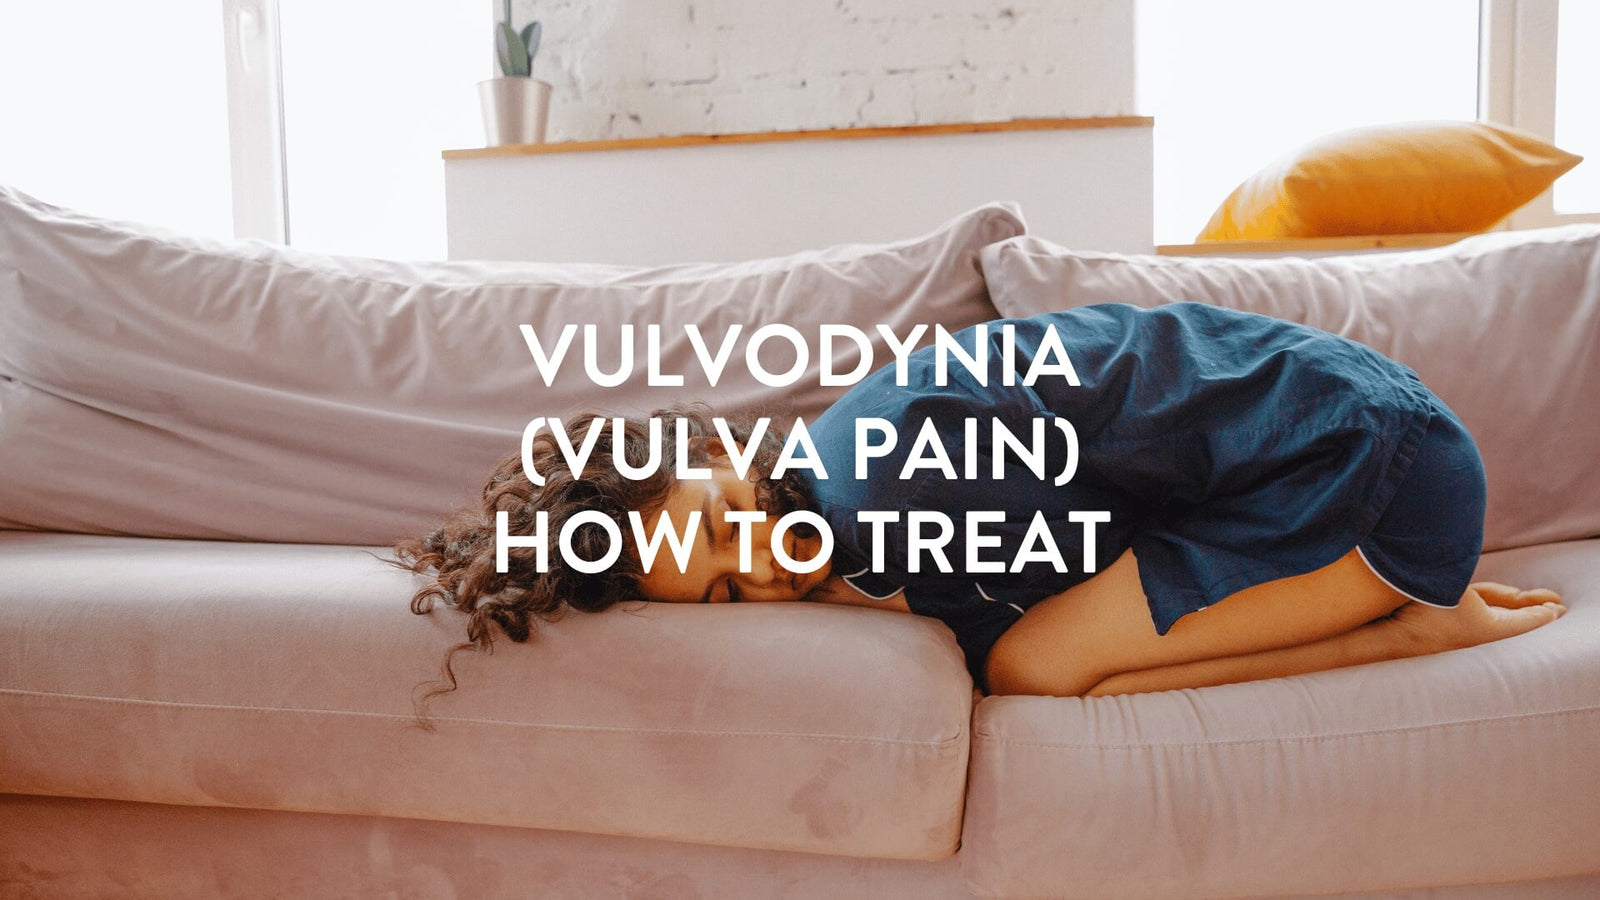 Vulvodynia (Vulva Pain) - How To Treat